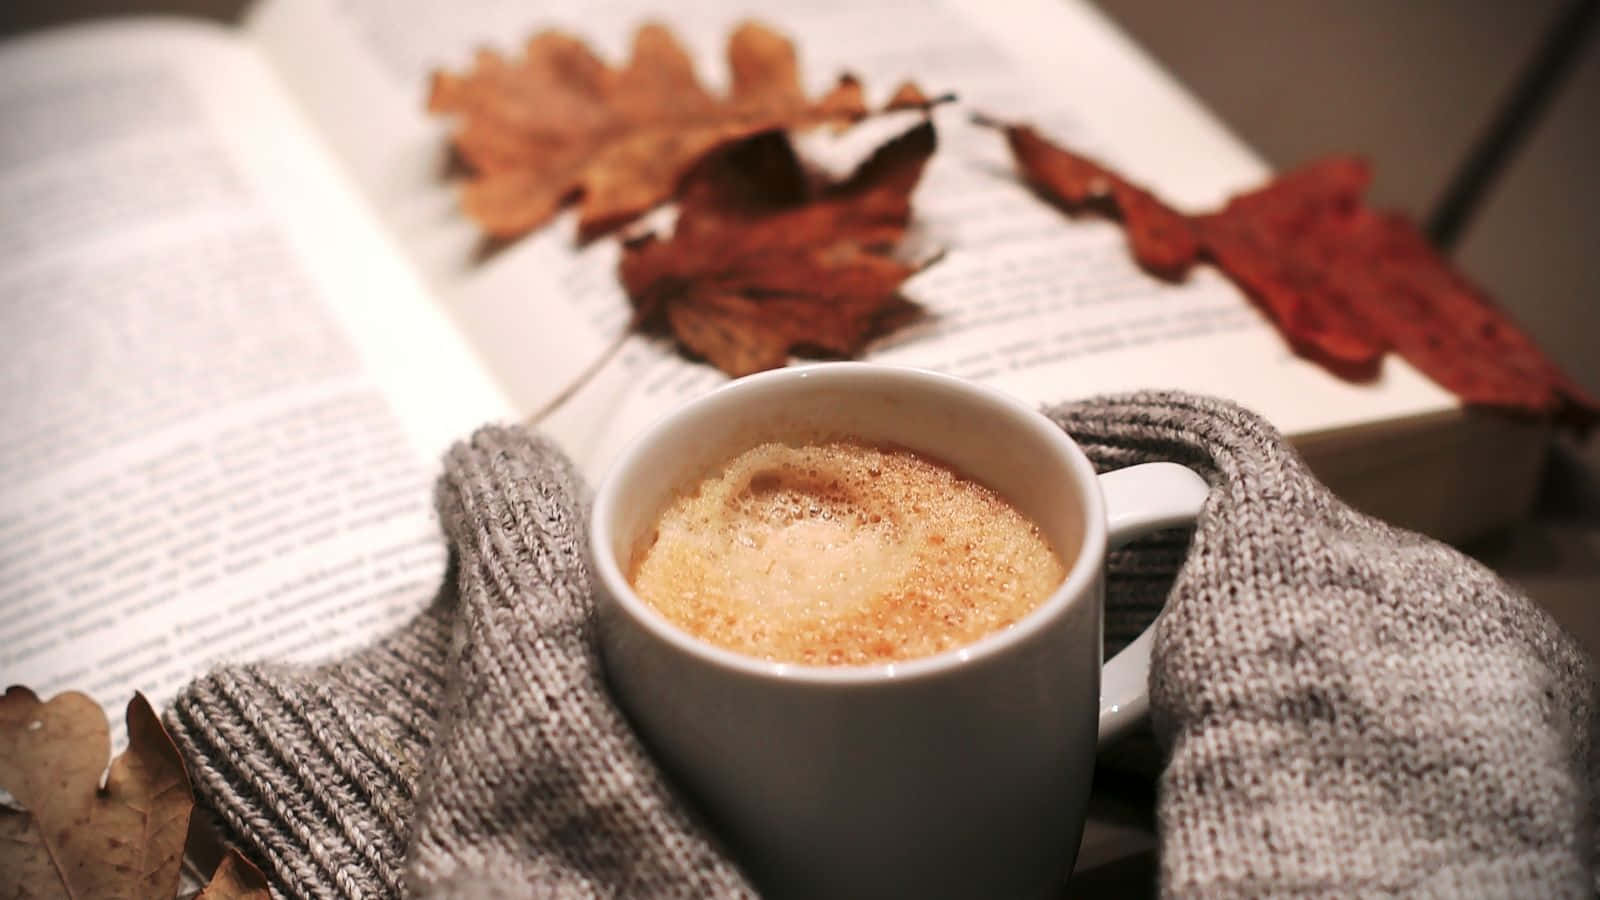 Cozy Autumn Readingwith Coffee.jpg Wallpaper